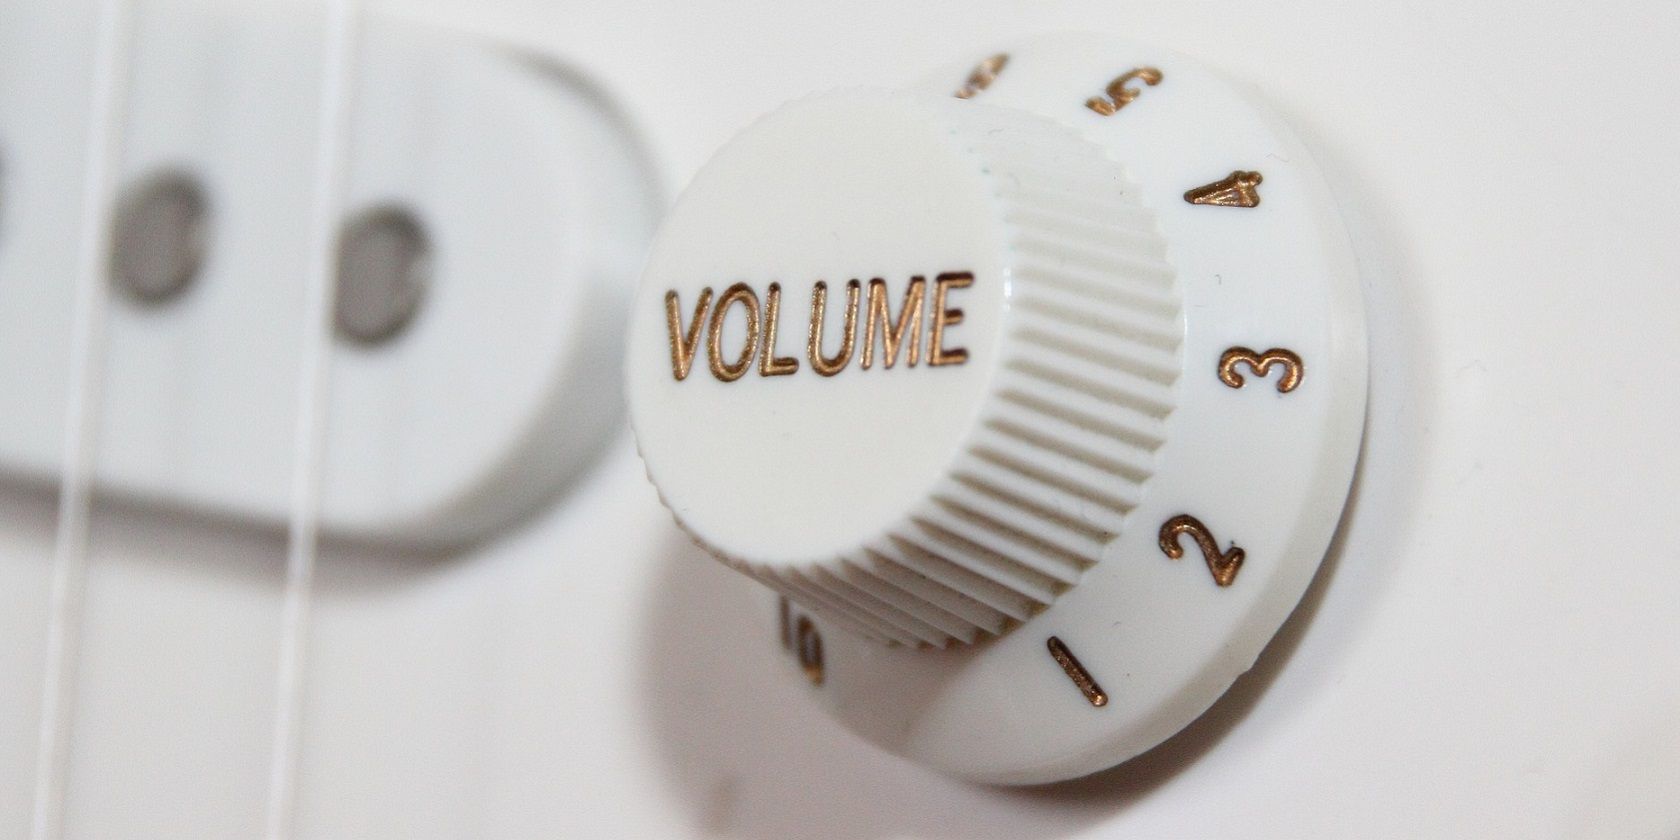 A volume control knob